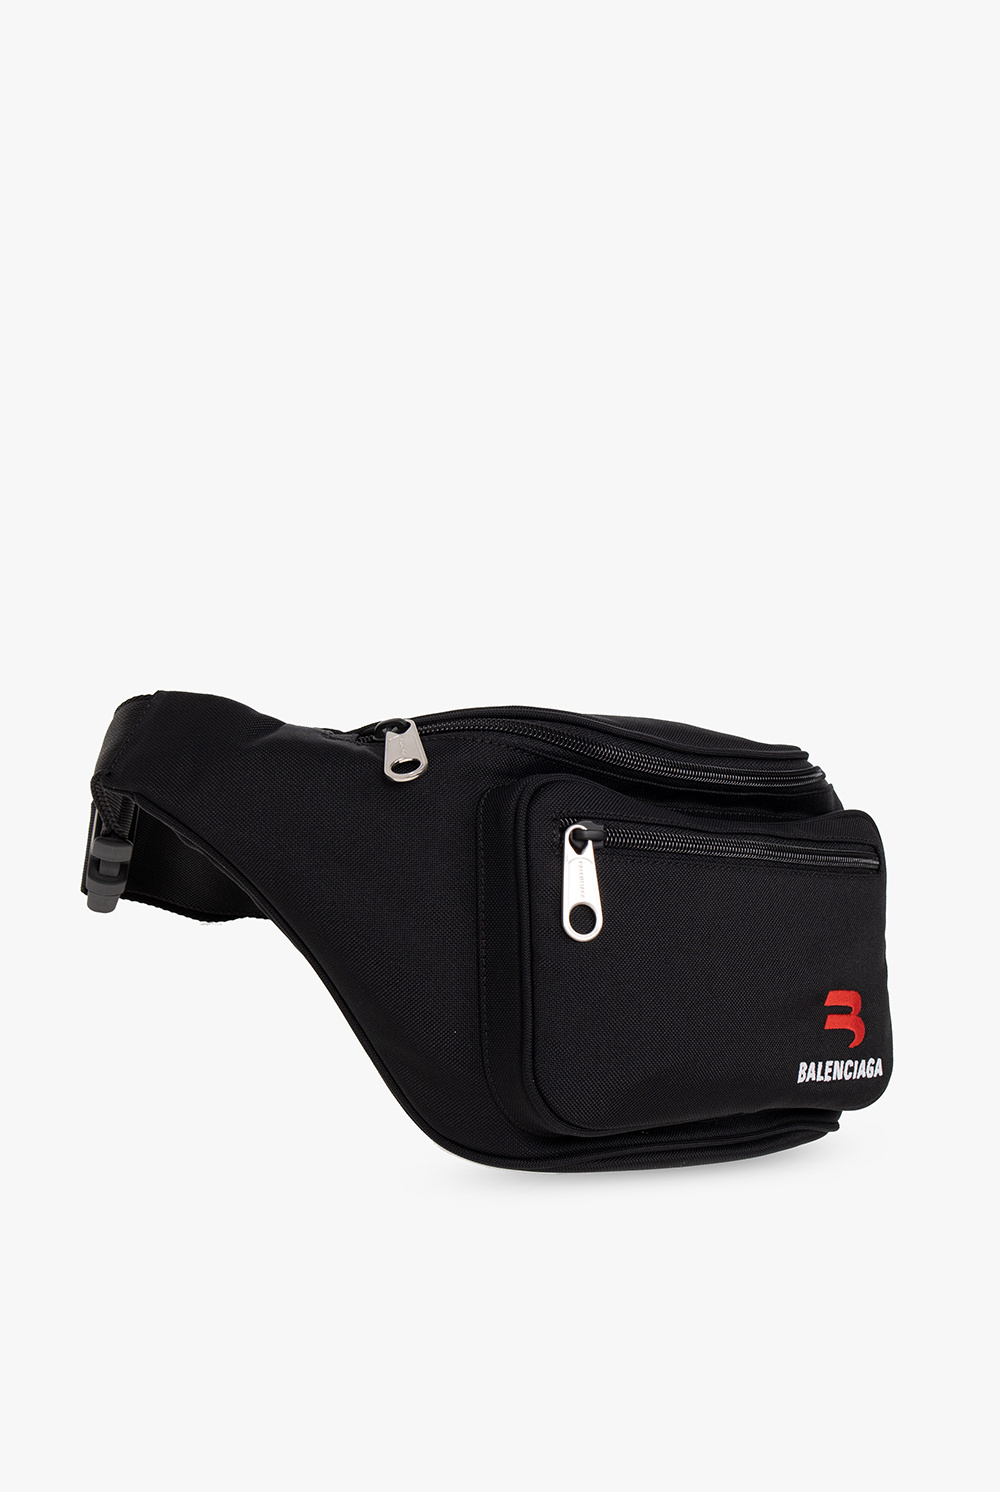 Balenciaga ‘Explorer’ belt WITH bag